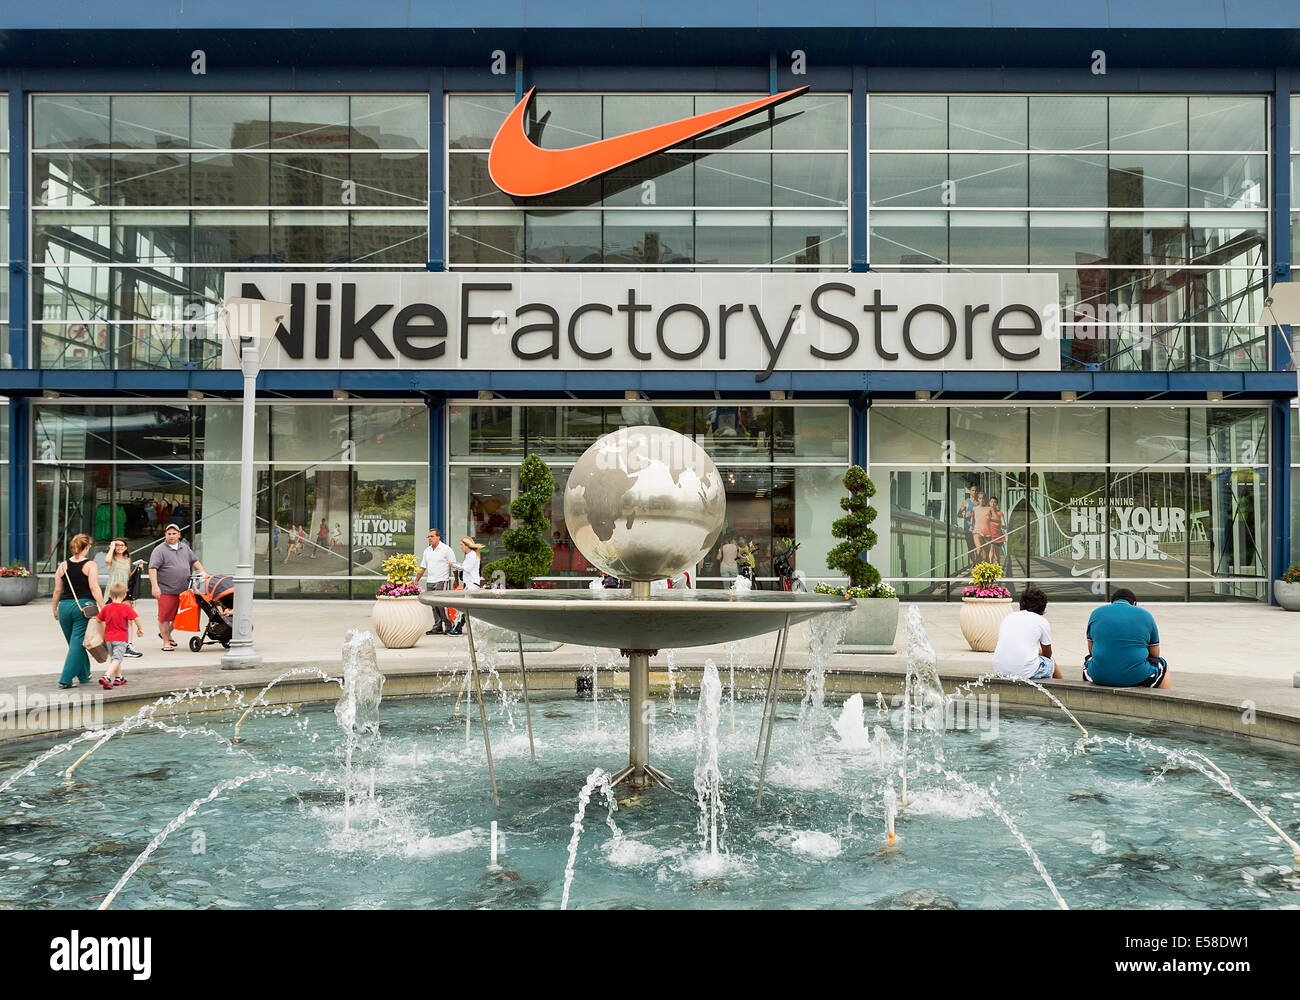 Nike factory -Fotos und -Bildmaterial in hoher Auflösung – Alamy